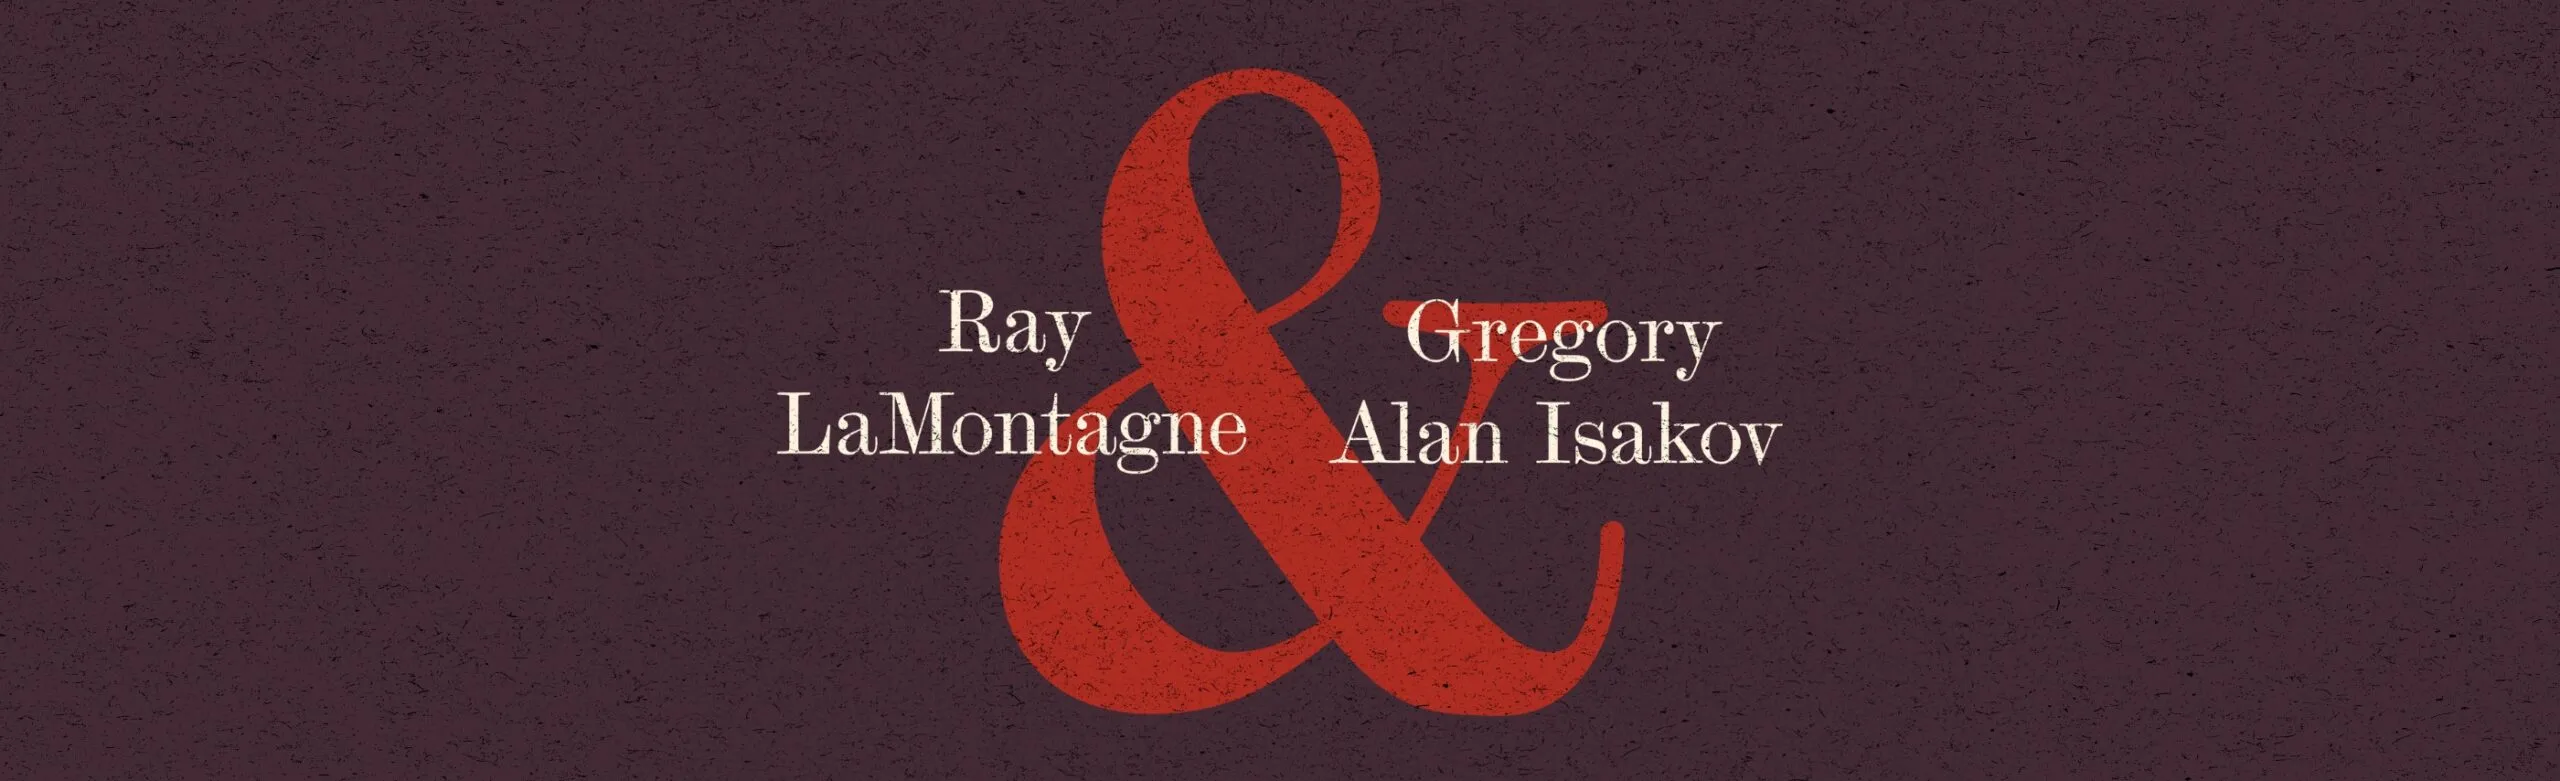 Ray Lamontagne & Gregory Alan Isakov